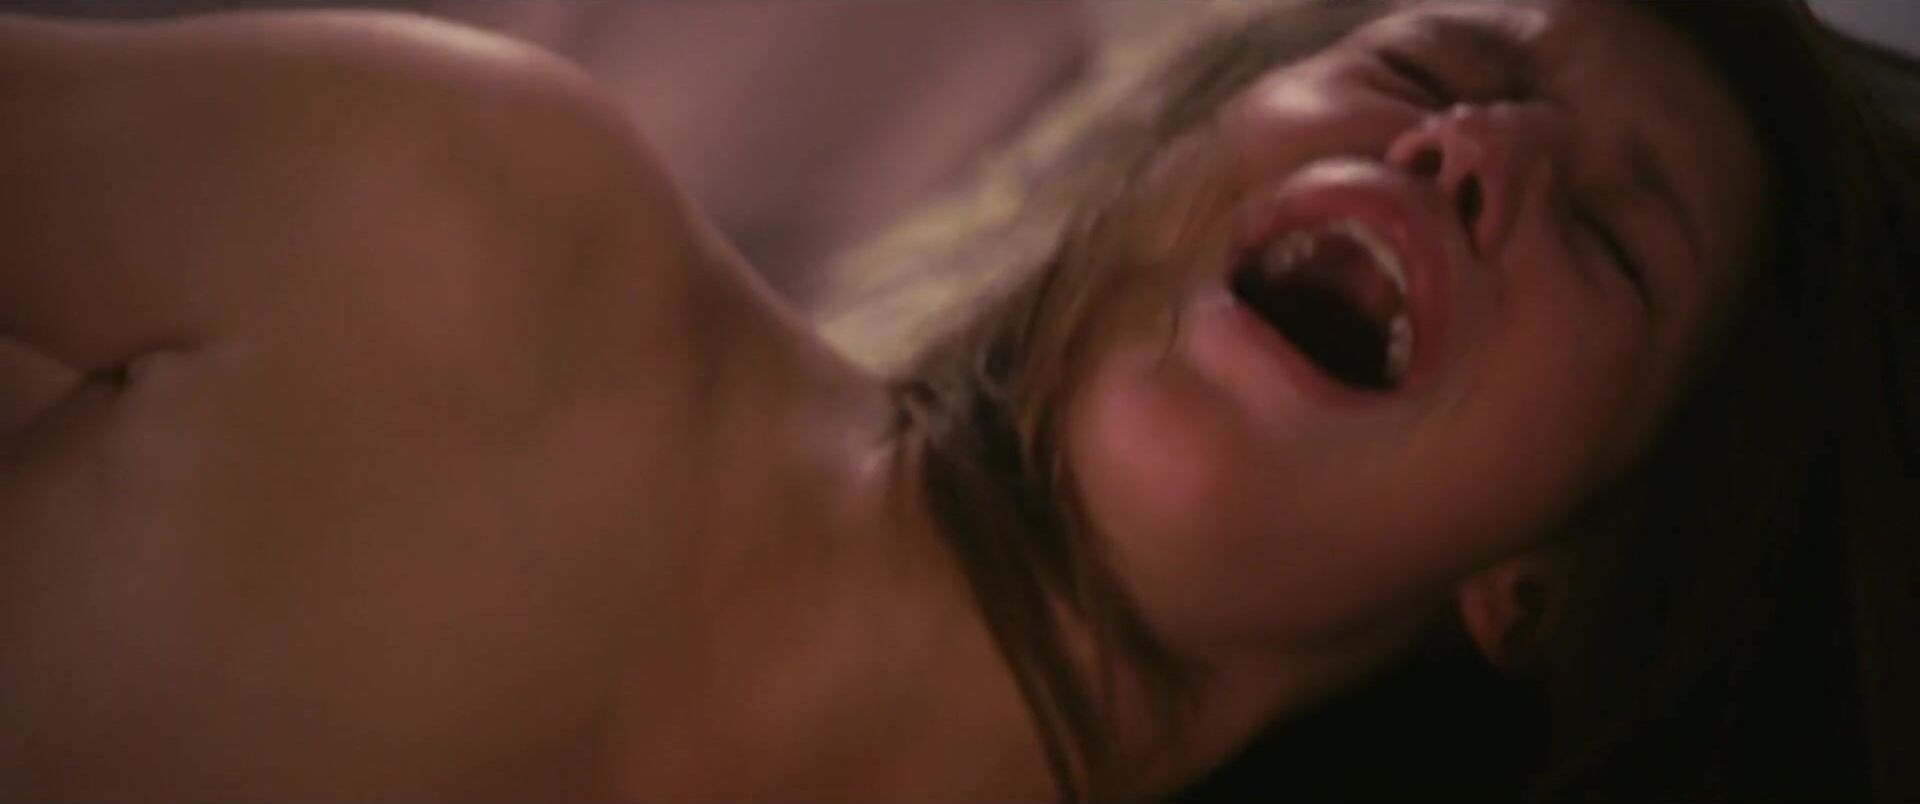 Internal Lea Seydoux takes advantage of Adele Exarchopoulos' wet twat to scissor and cum together BadJoJo - 1